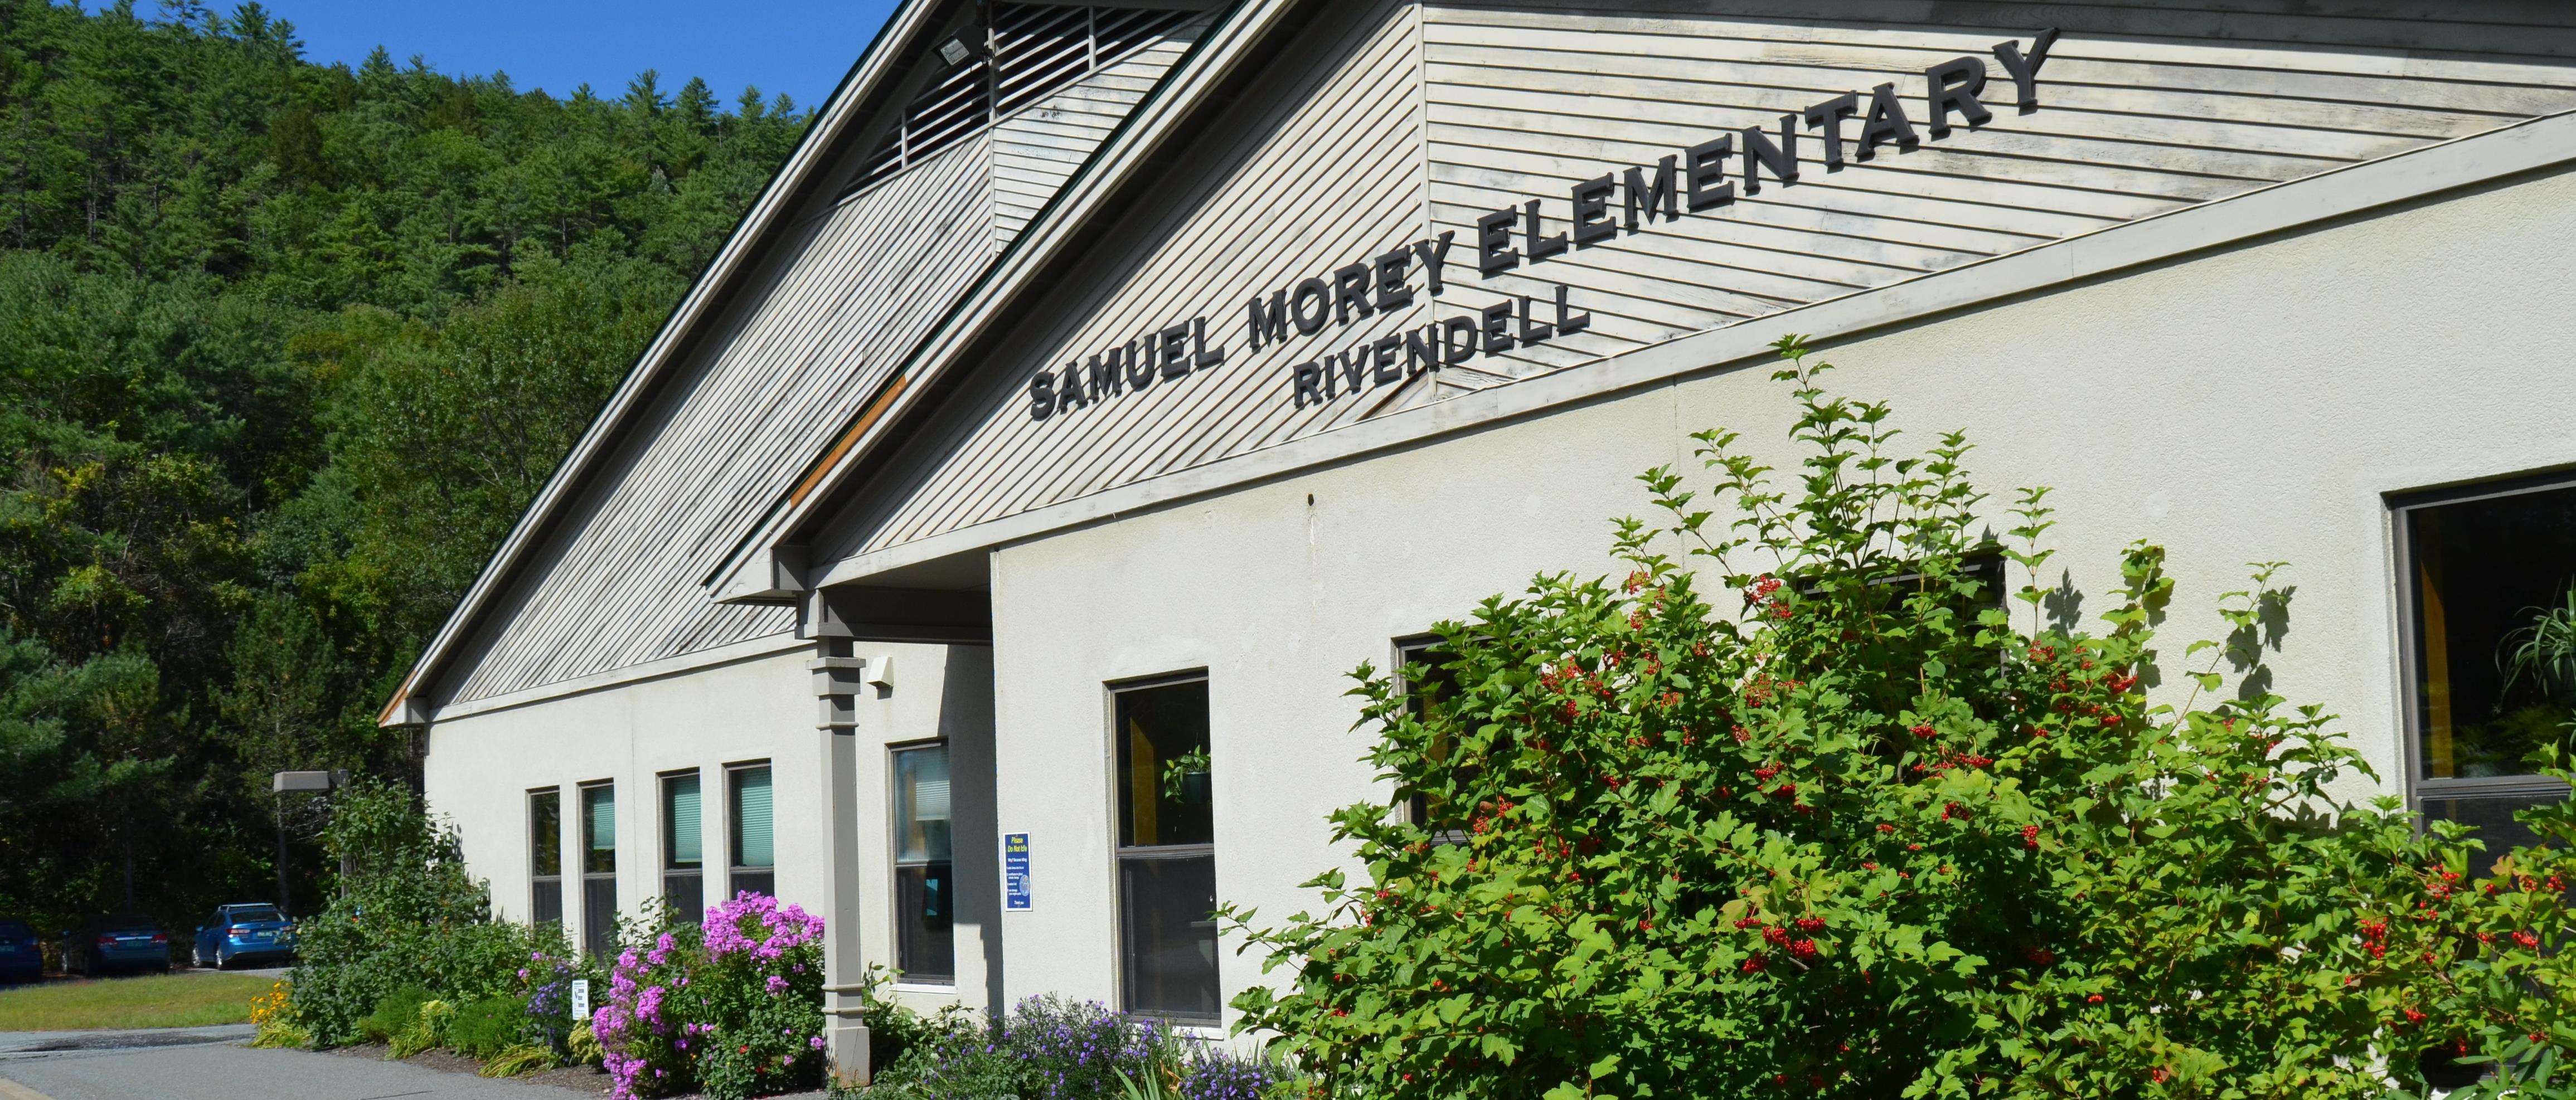 Samuel Morey Elementary School